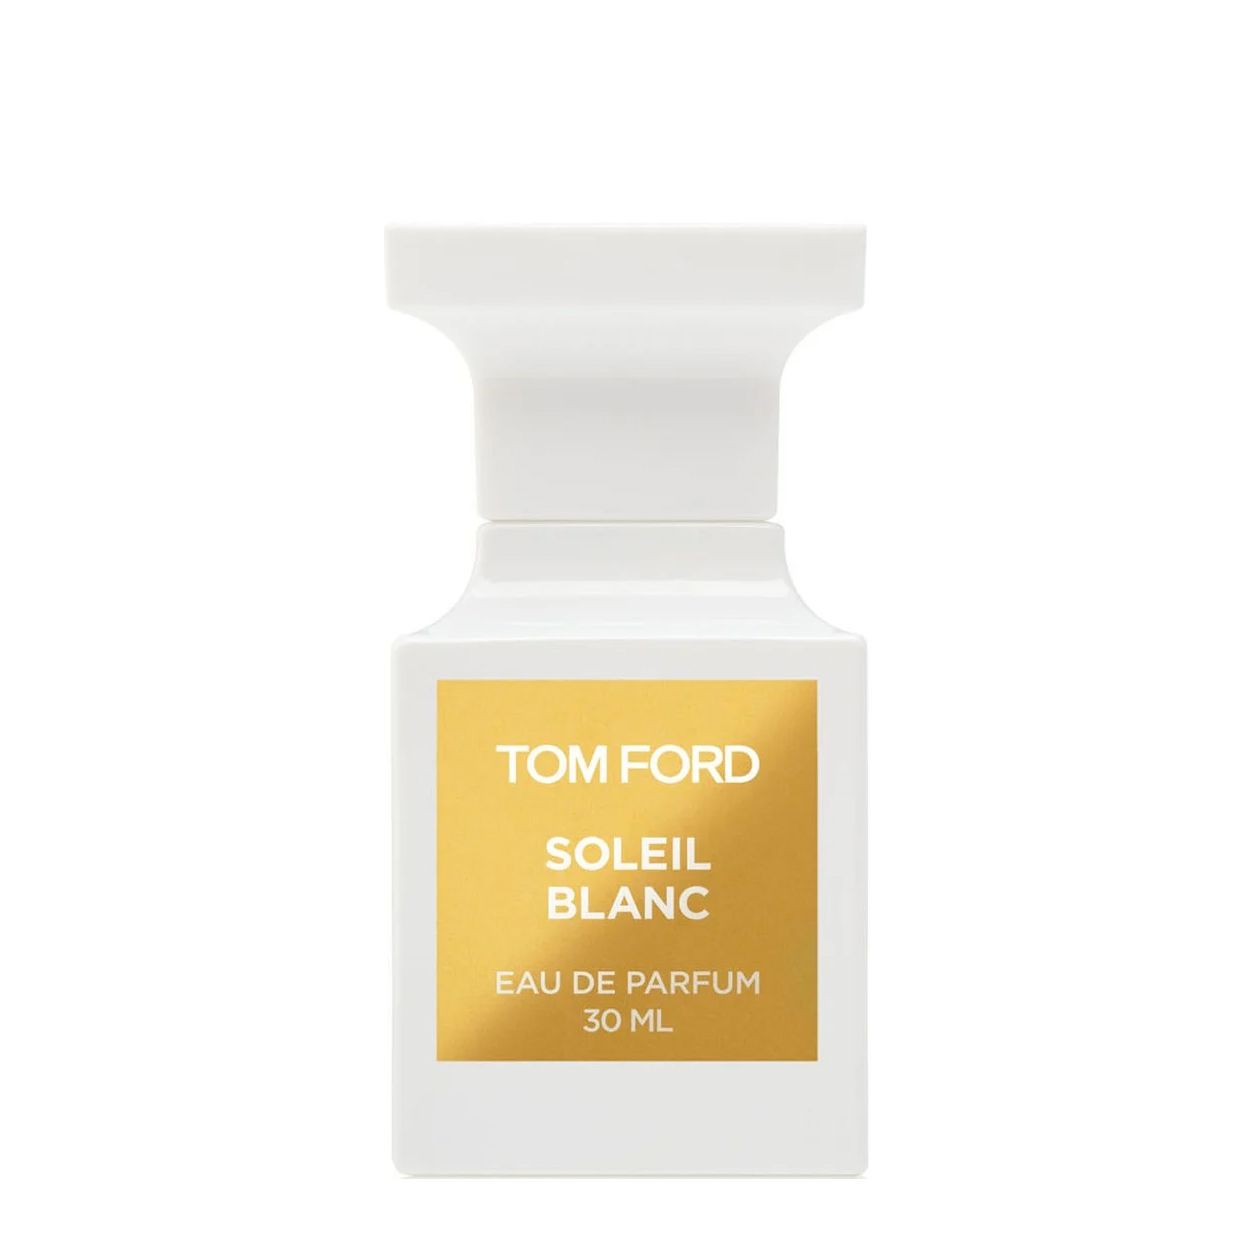 Вода парфюмерная Tom Ford Soleil Blanc, унисекс, 30 мл tom ford спрей для тела soleil neige all over body spray